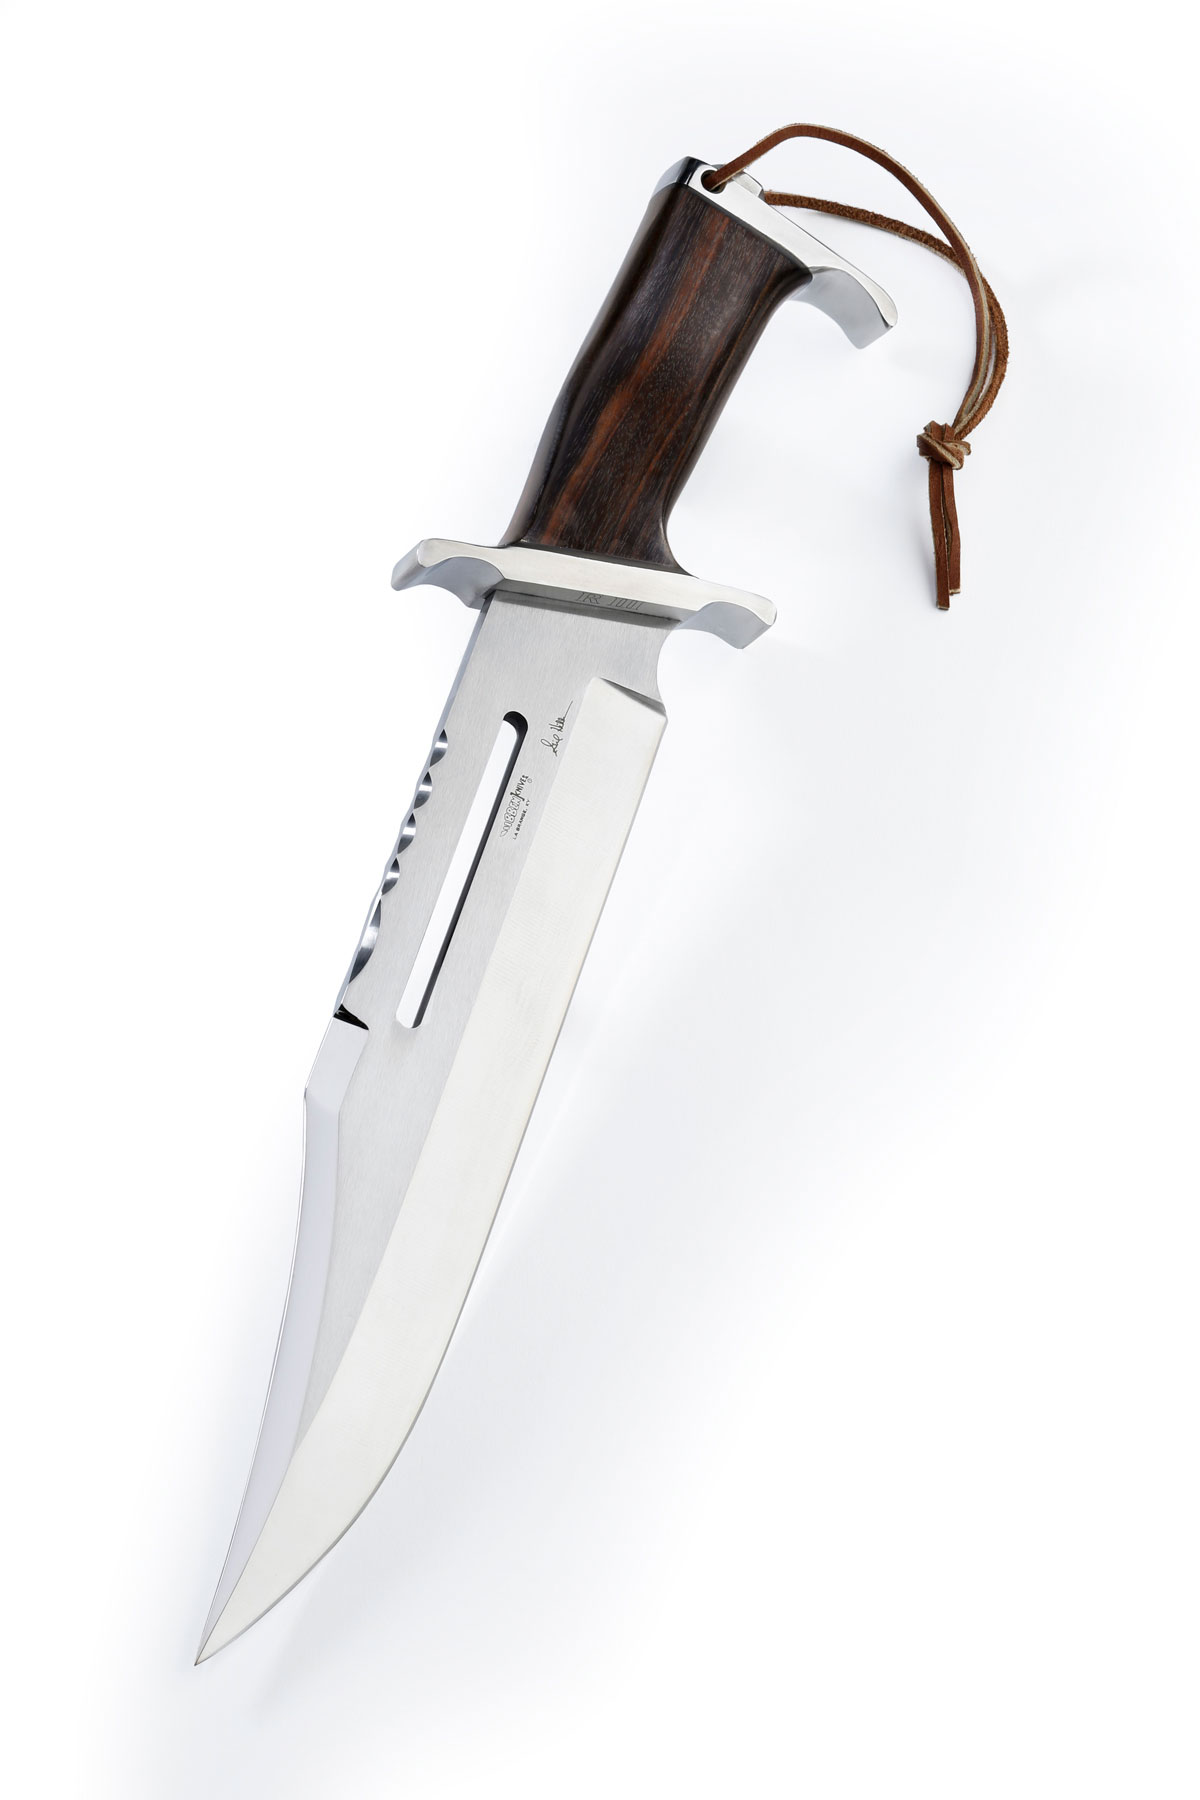 original bowie knife design